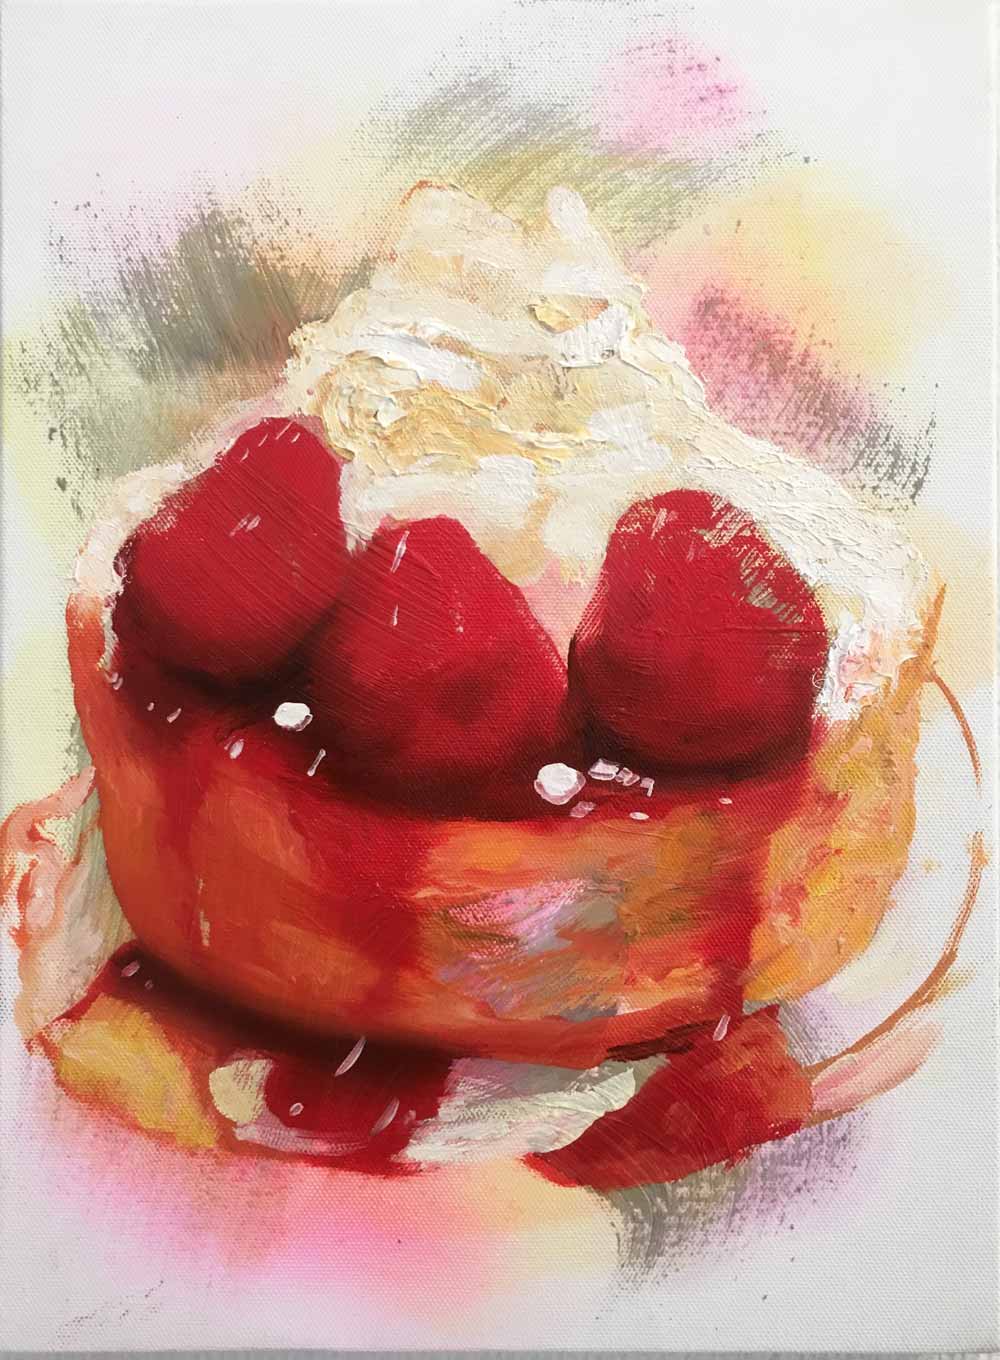 y2017 Strawberry Pancakes